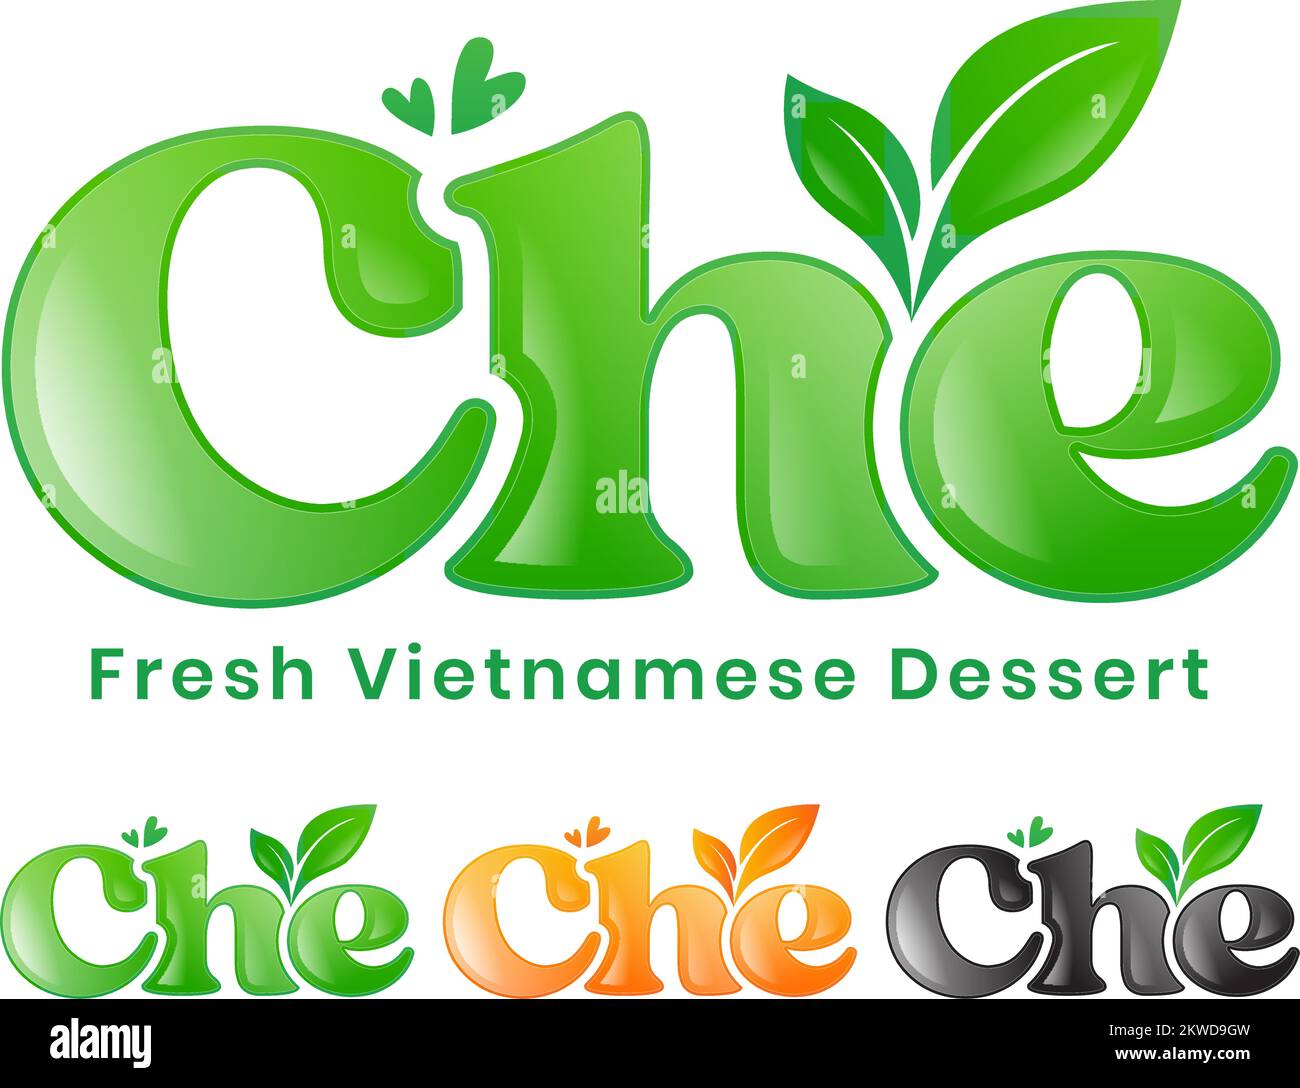 che vietnamese dessert drinks Stock Vector